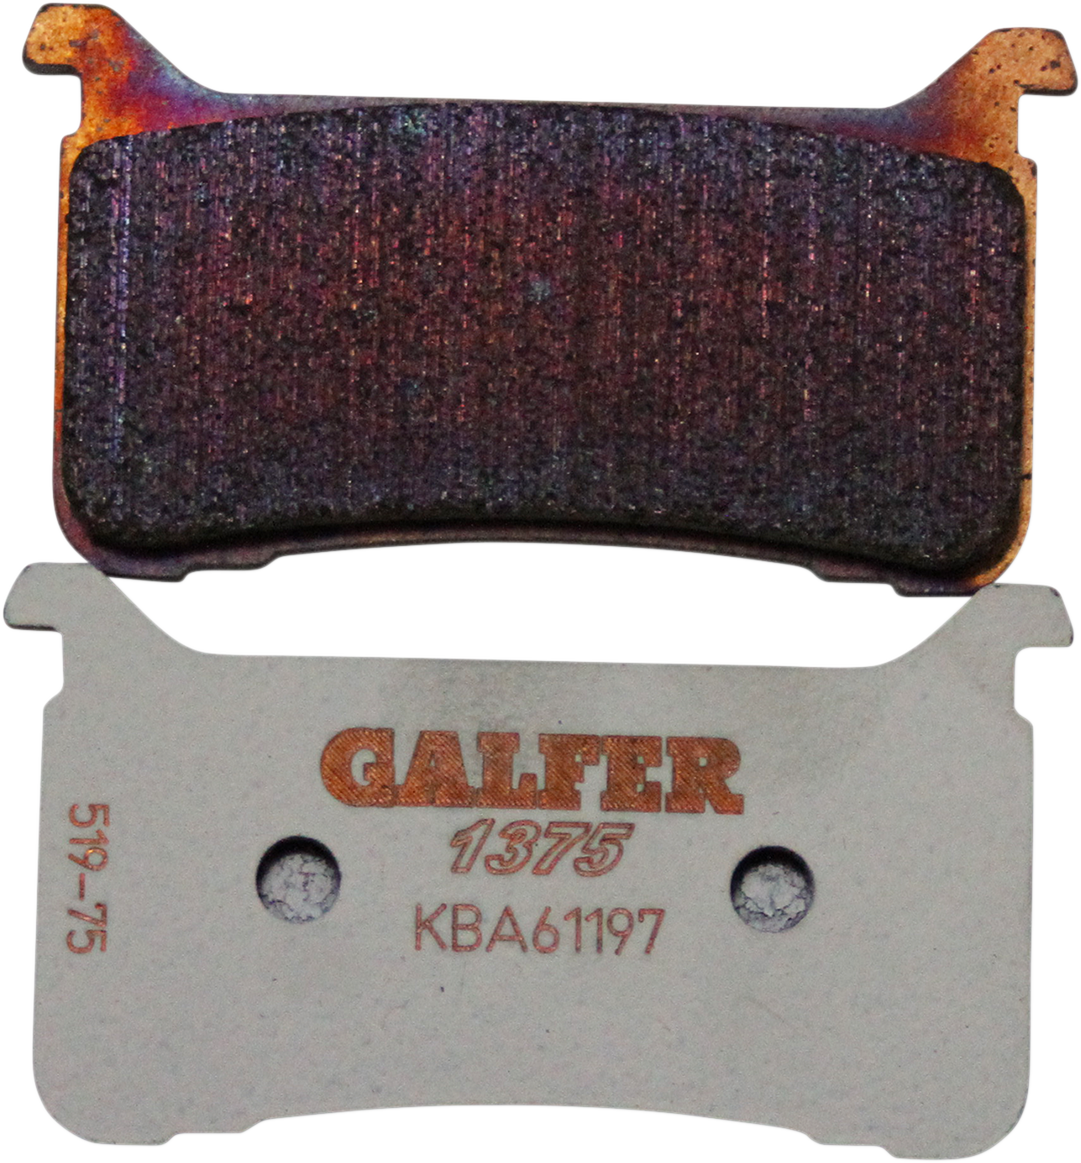 GALFER HH Sintered Ceramic Brake Pads FD519G1375